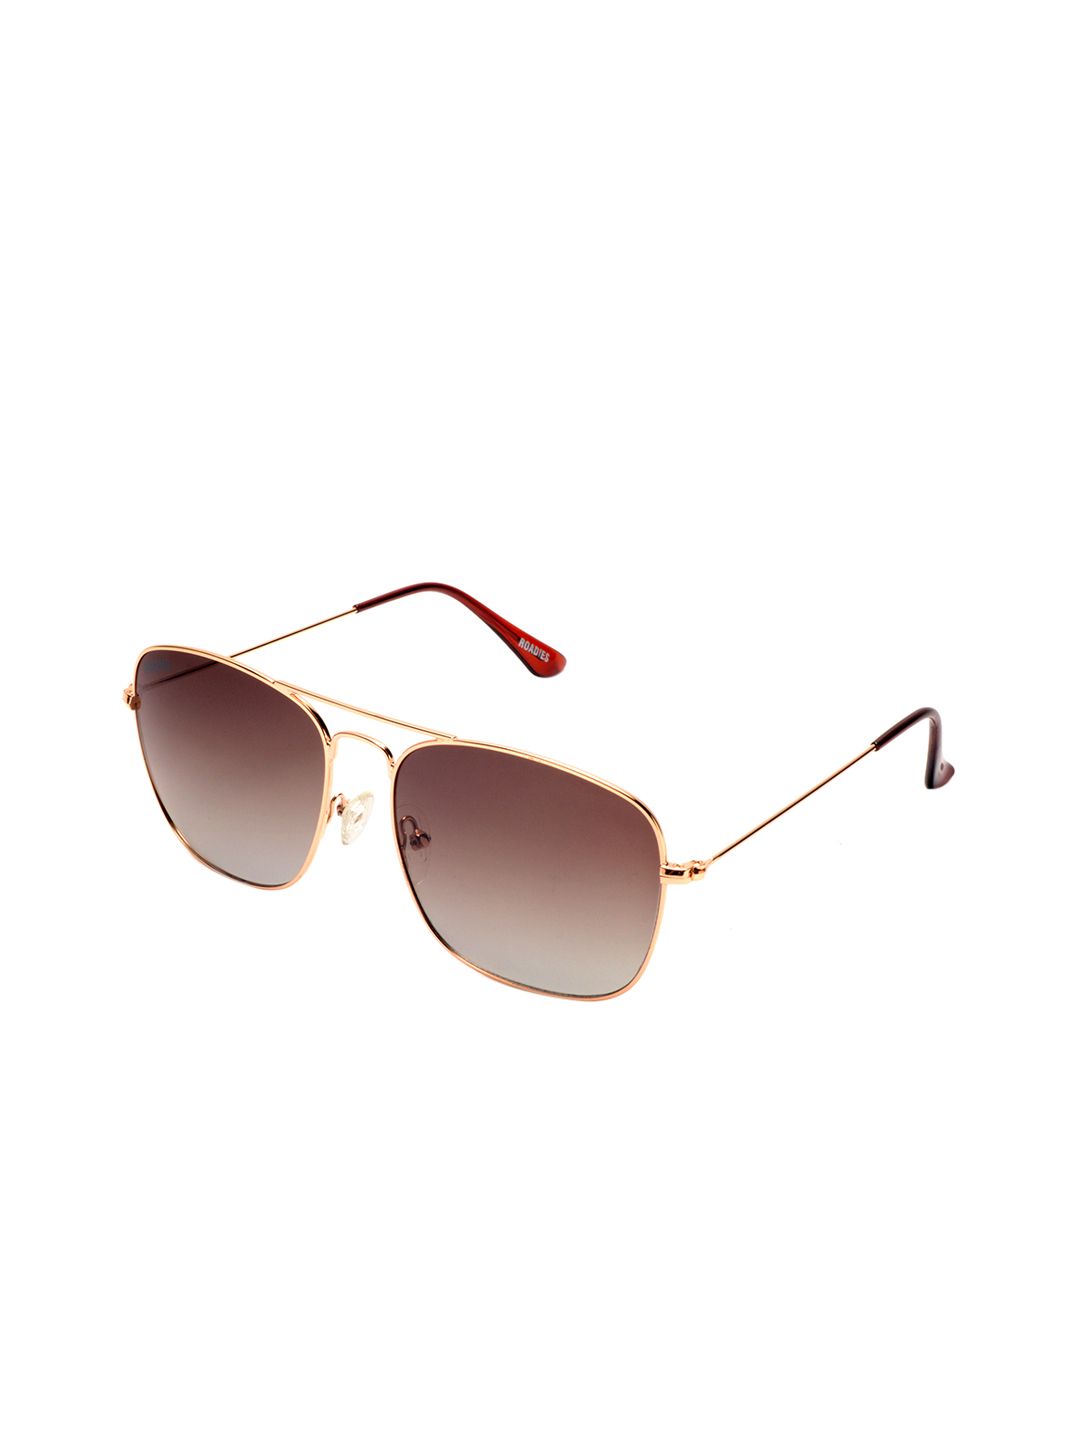 Roadies Unisex Brown Lens & Gold-Toned Square Sunglasses with Polarised Lens Price in India